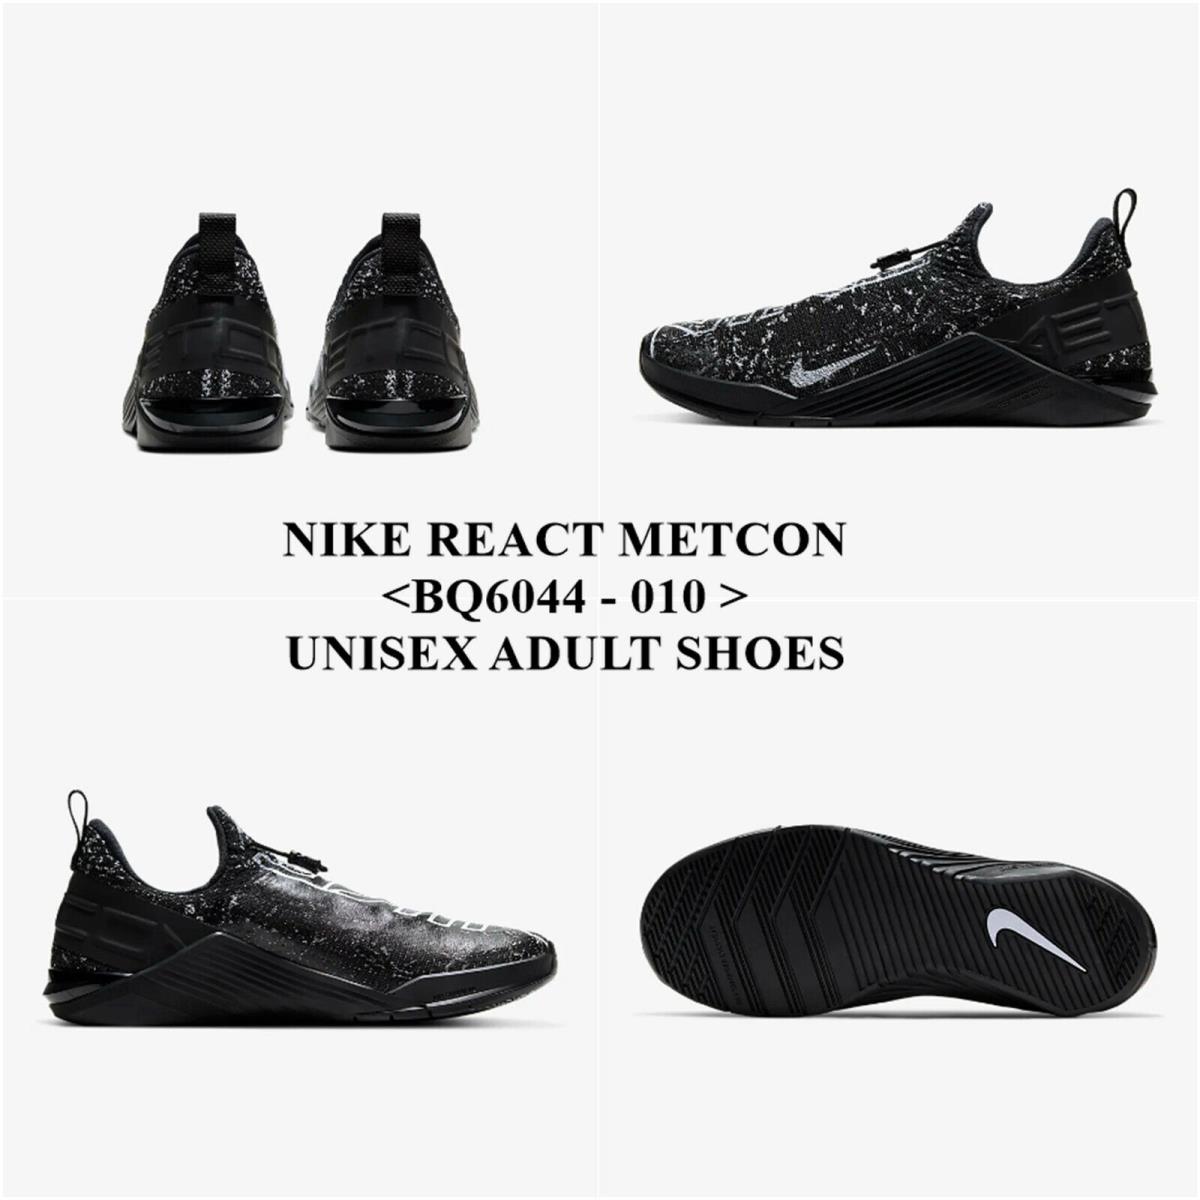 Nike React Metcon BQ6044 - 010 Unisex Training Shoes.new